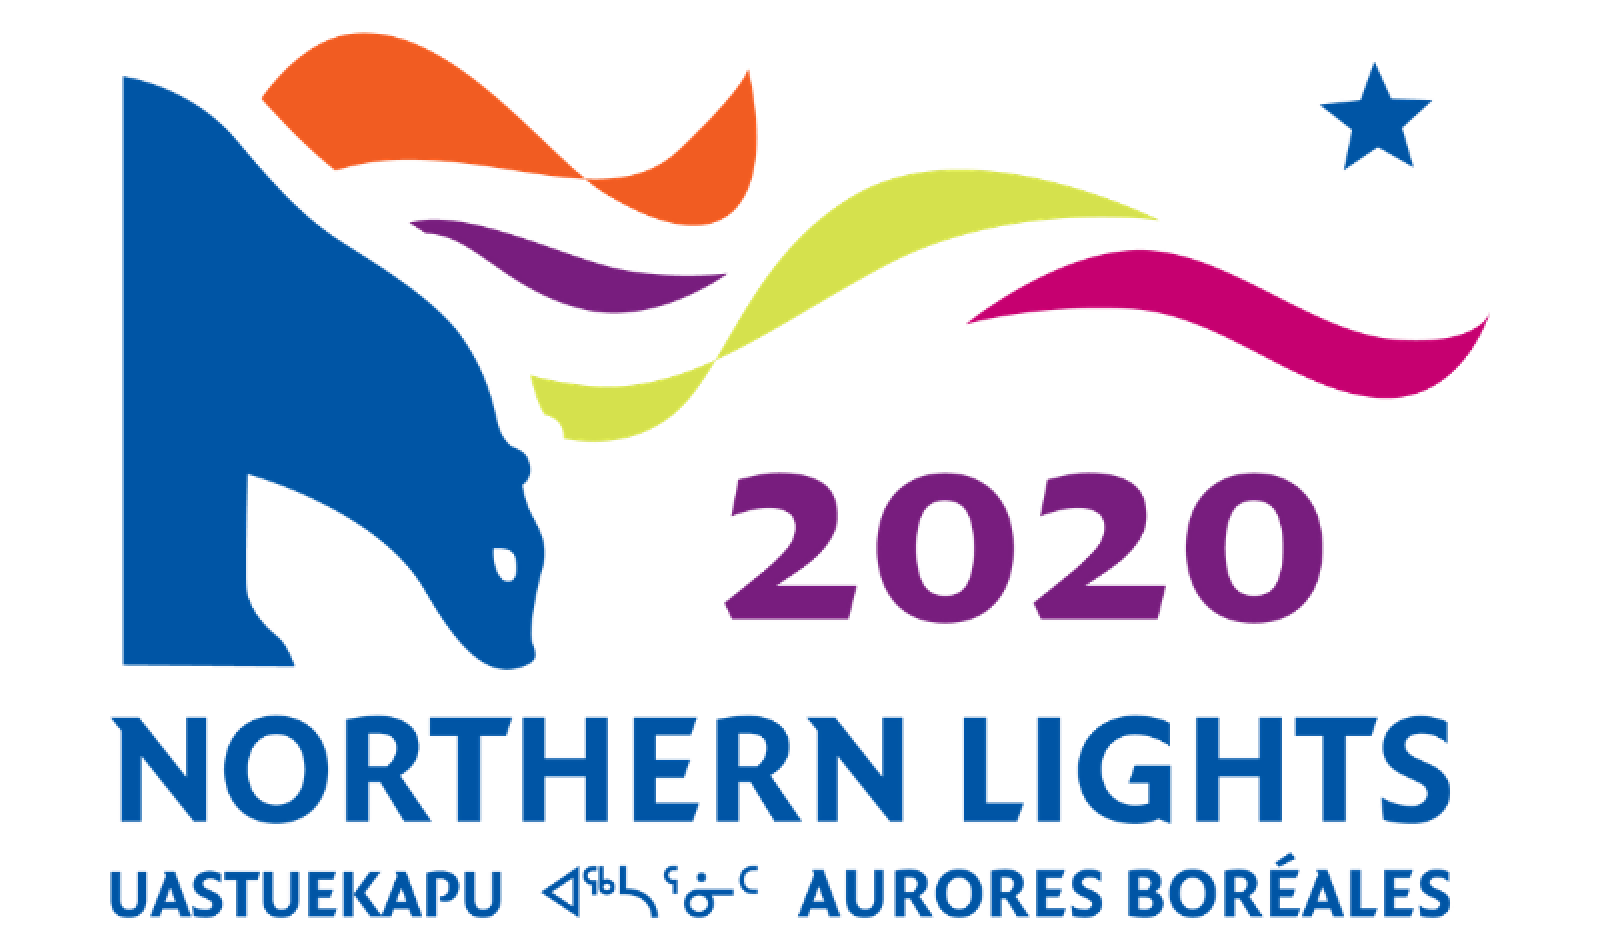 Northerns Lights 2020  - event logo